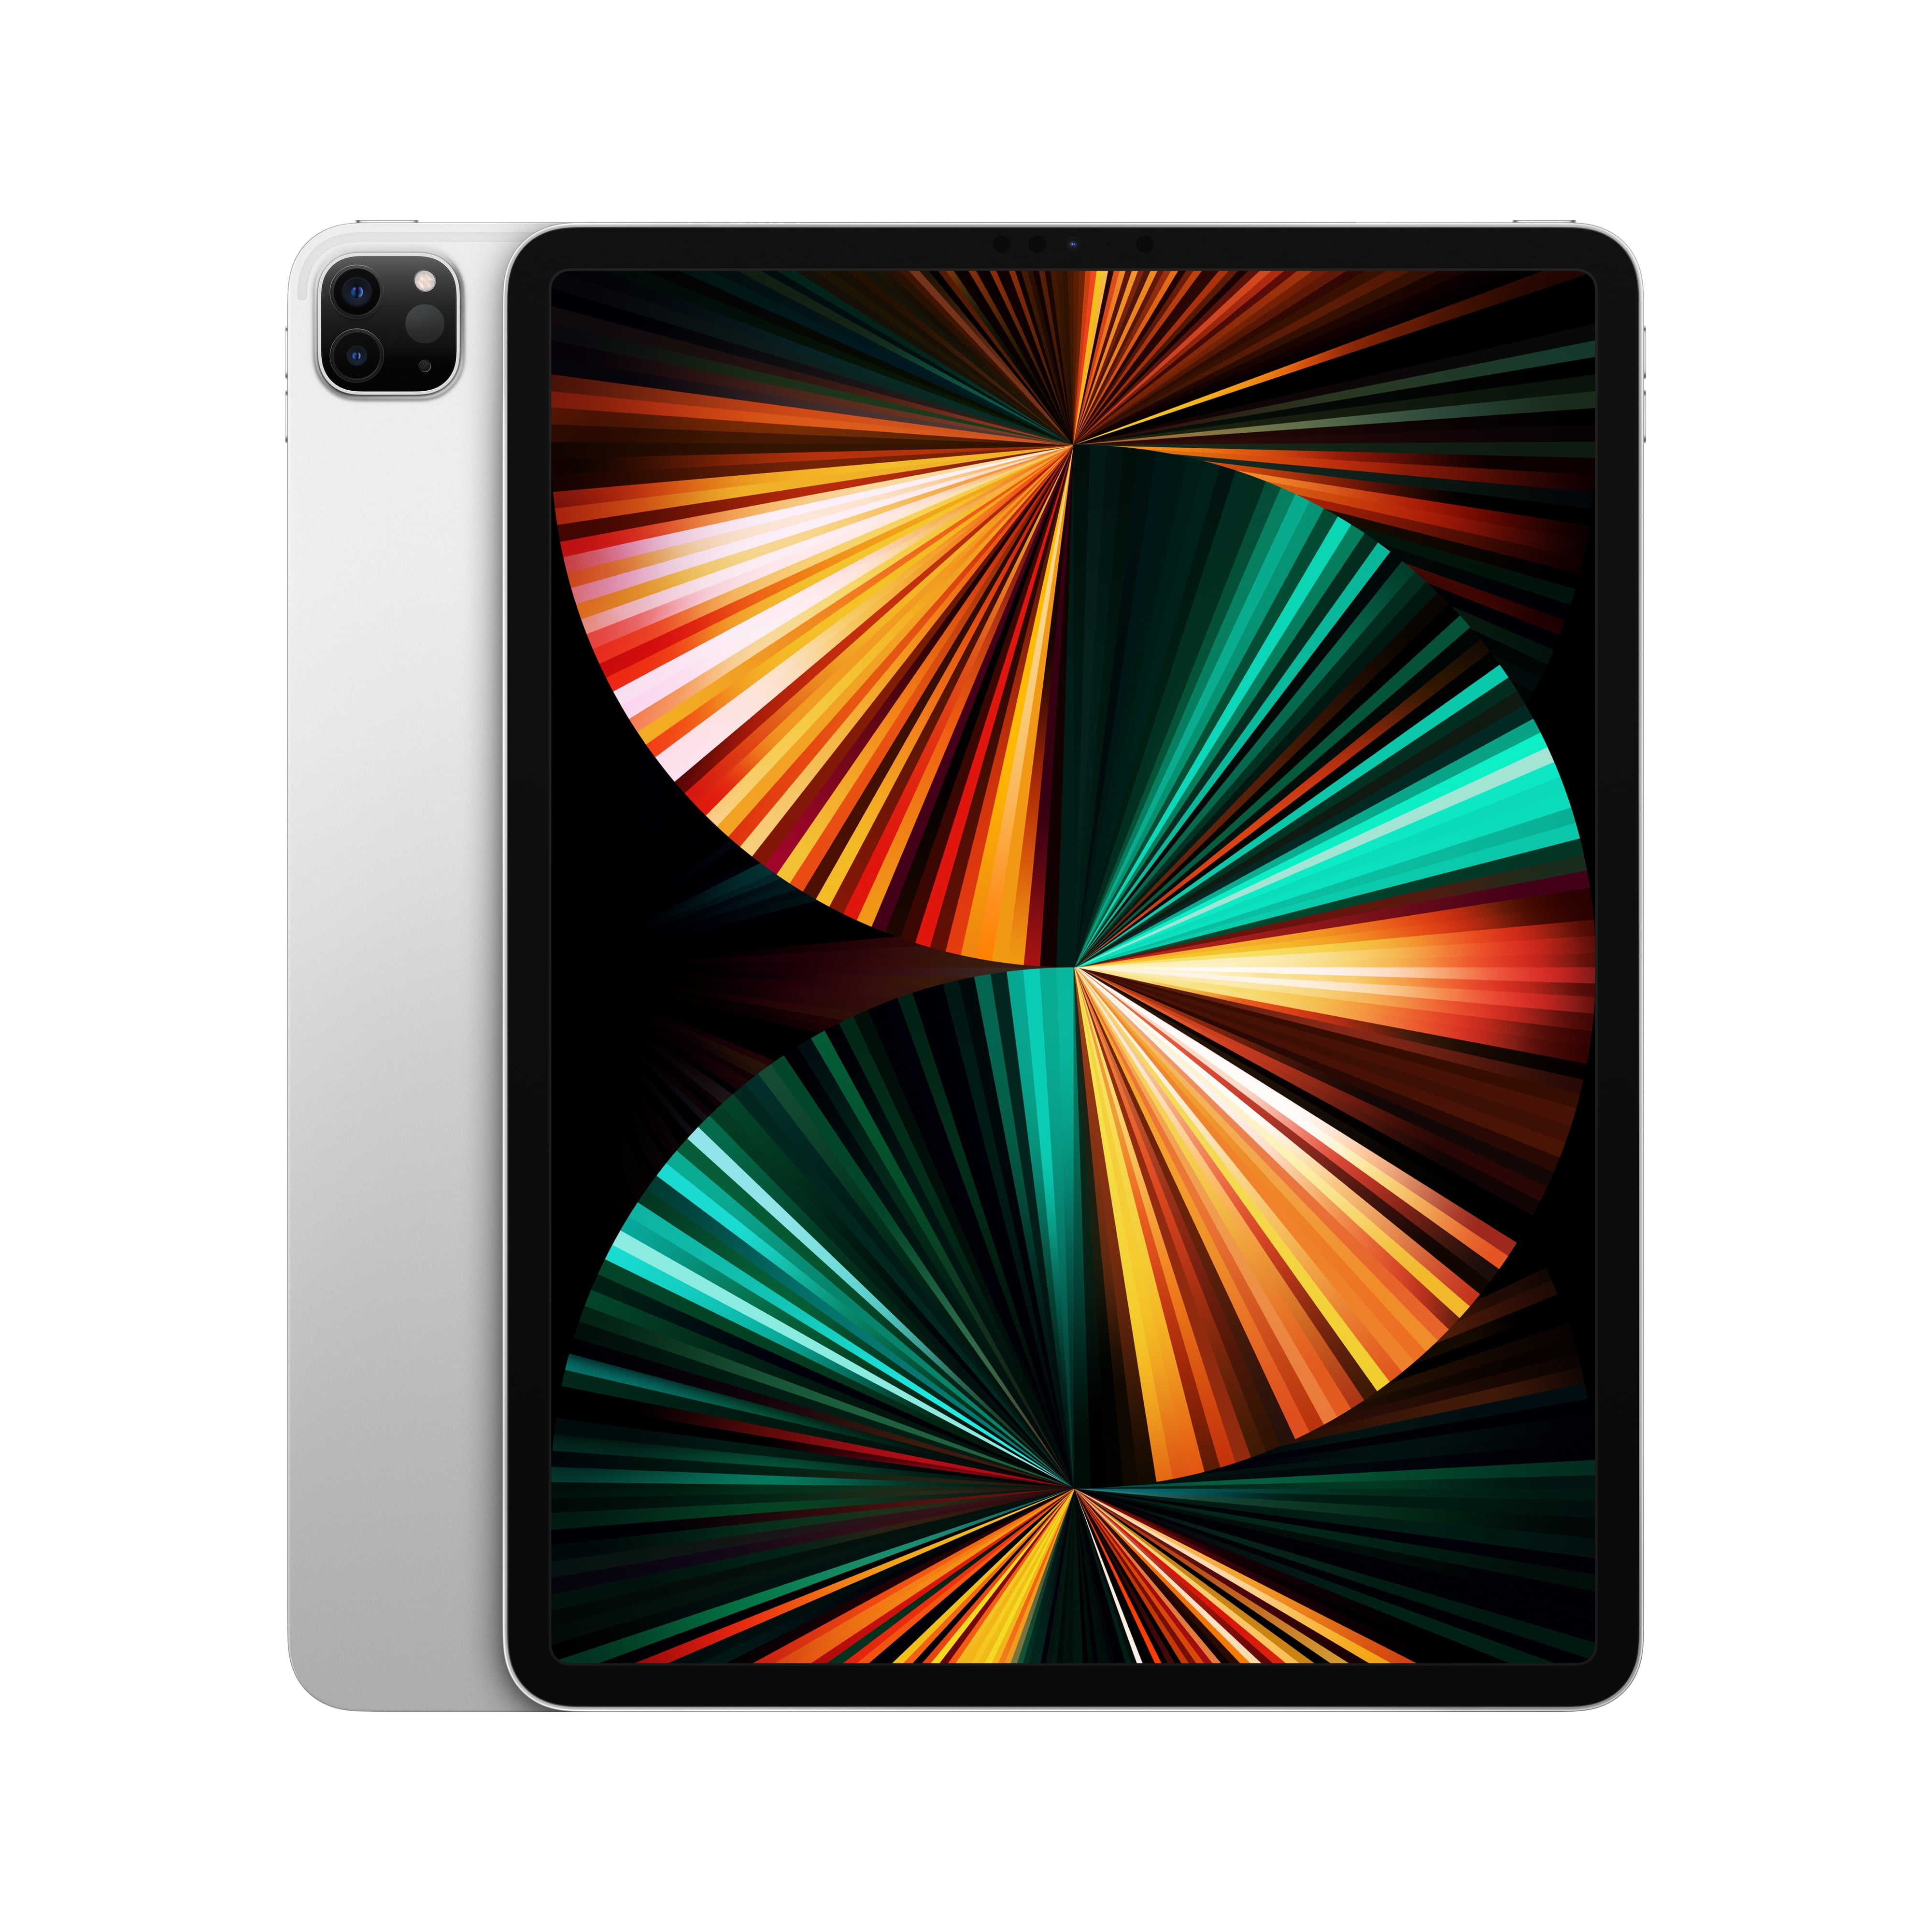 Apple 12.9-inch iPad Pro (2021) Wi-Fi 512GB - Space Gray - Walmart.com